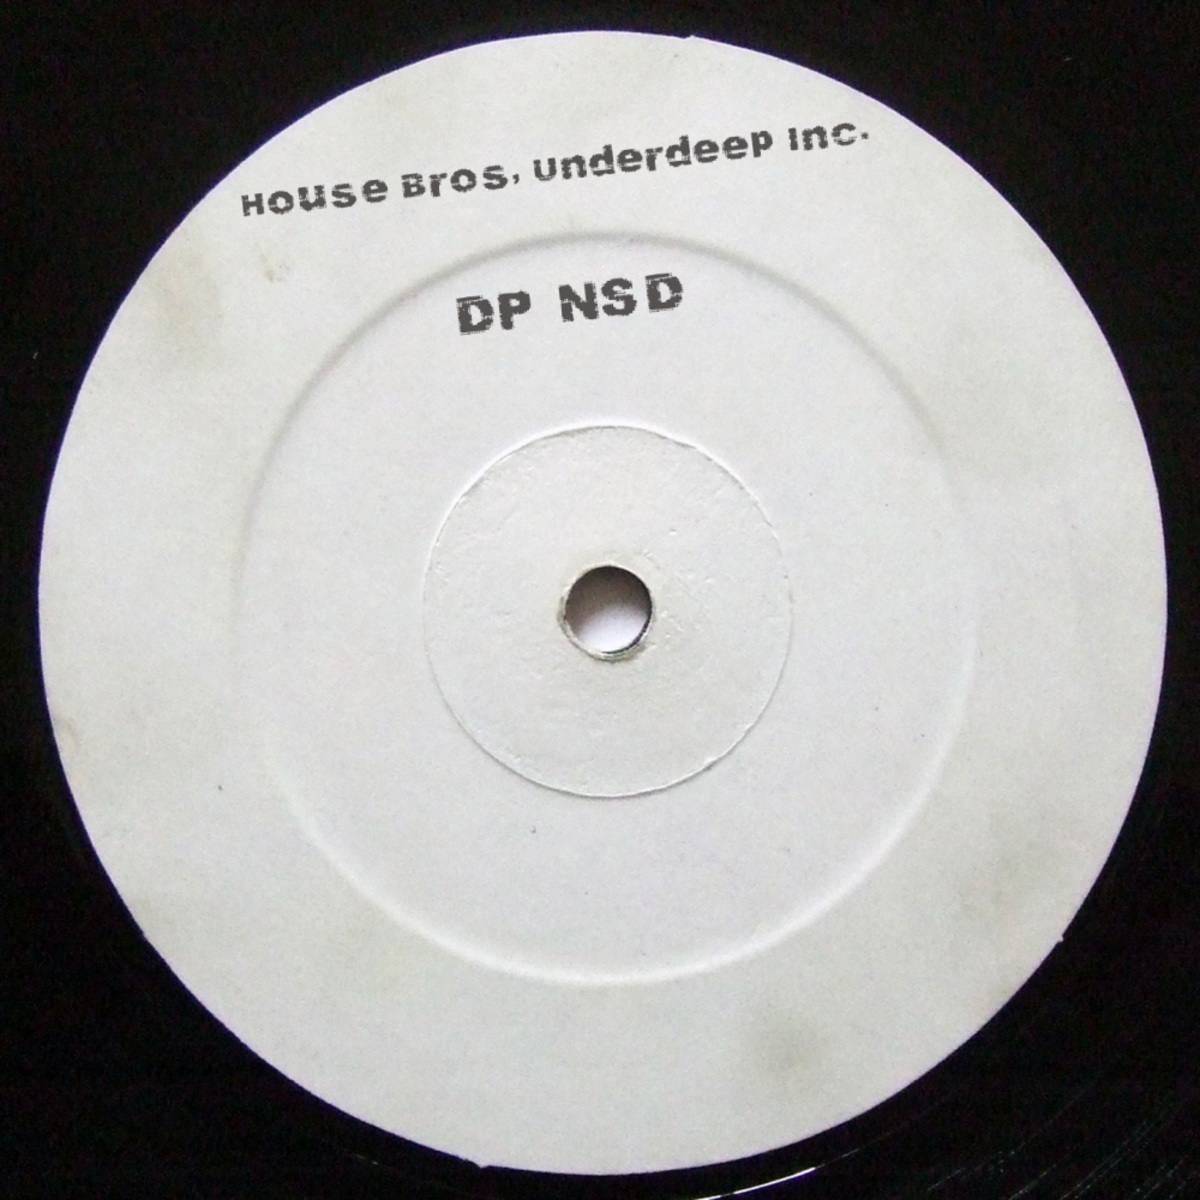 House Bros & Underdeep Inc. - DP NSD / Audacity Music